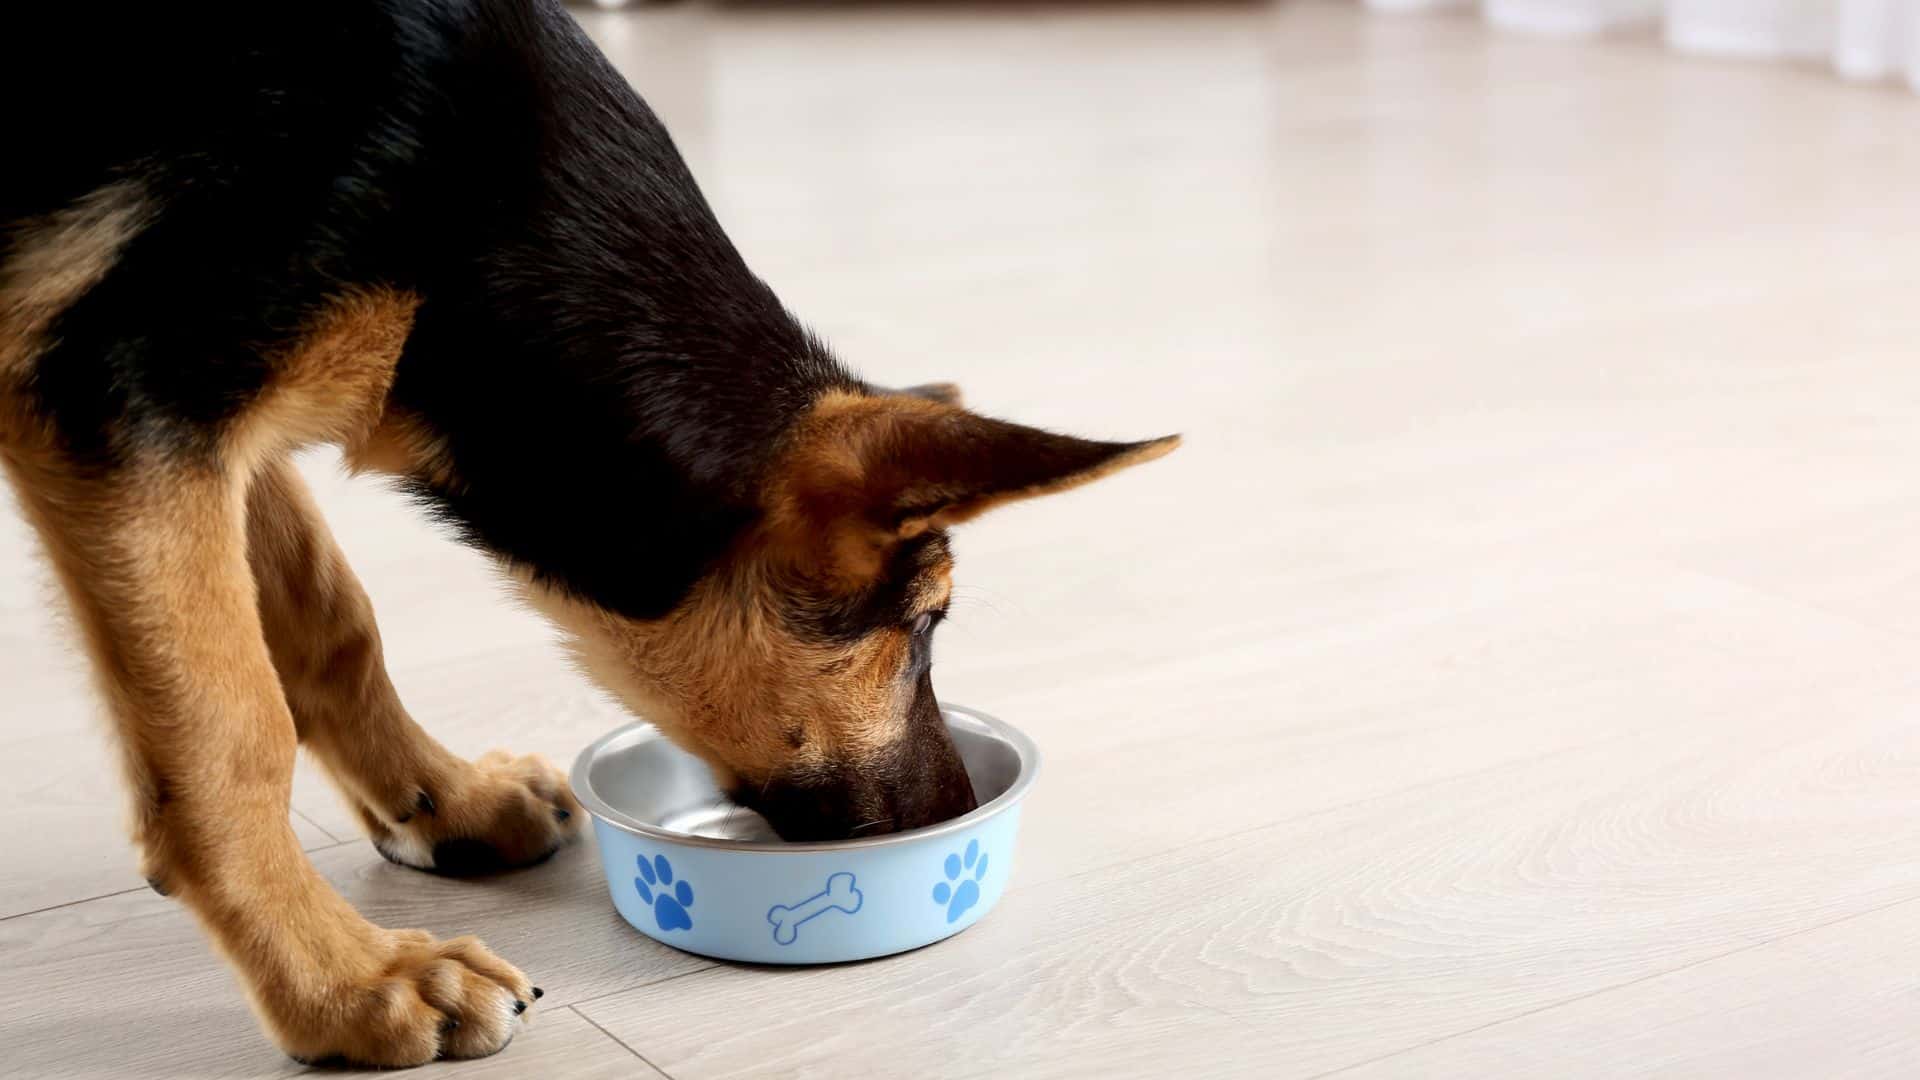 german shepherd dog eating from a bowl